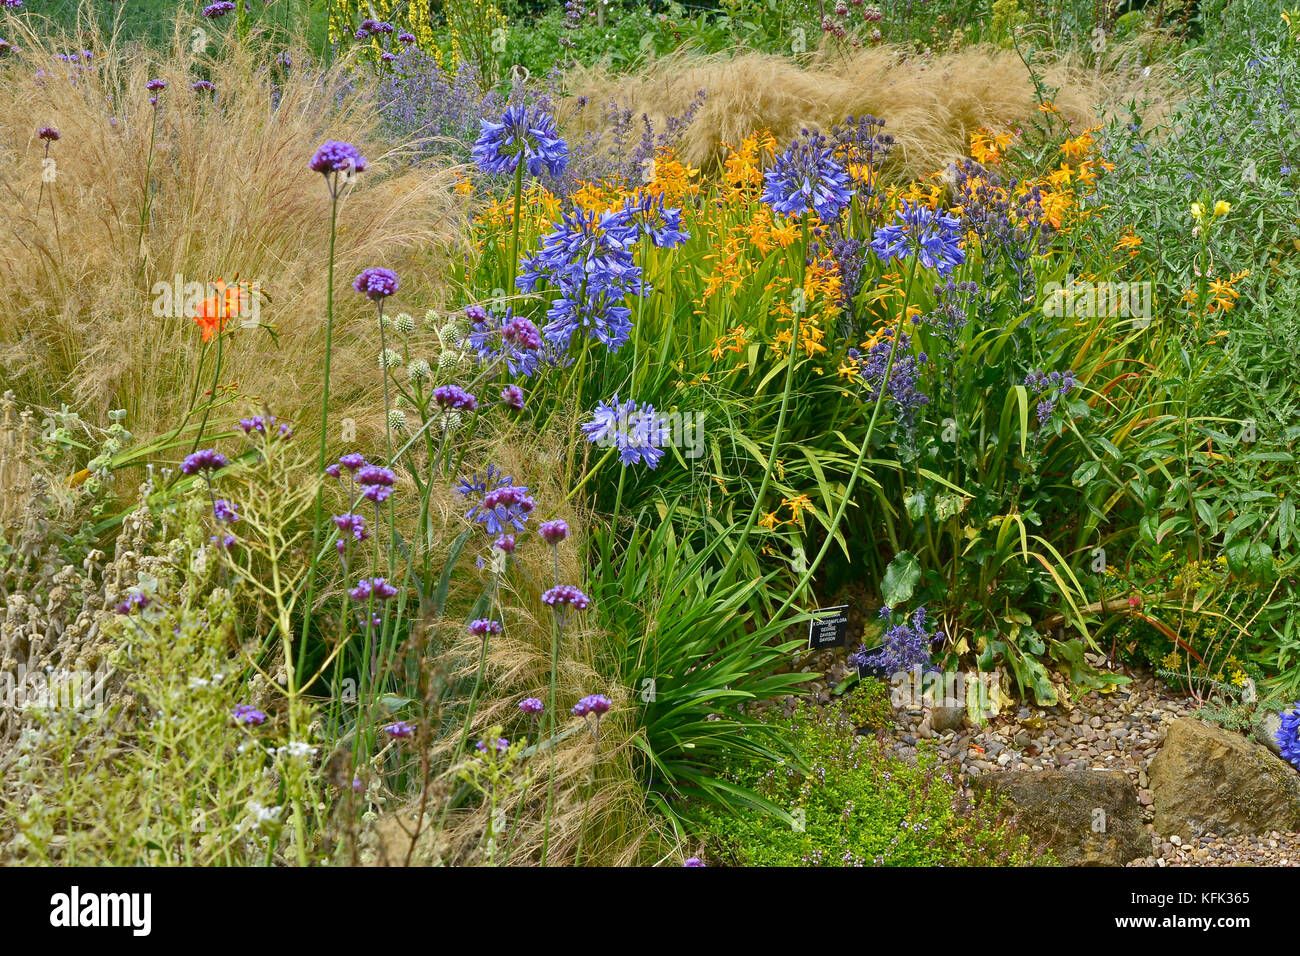 Garden flower border with flowering Verbena Bonariensis, Crocosmia and Agapanthus making a colourful display Stock Photo